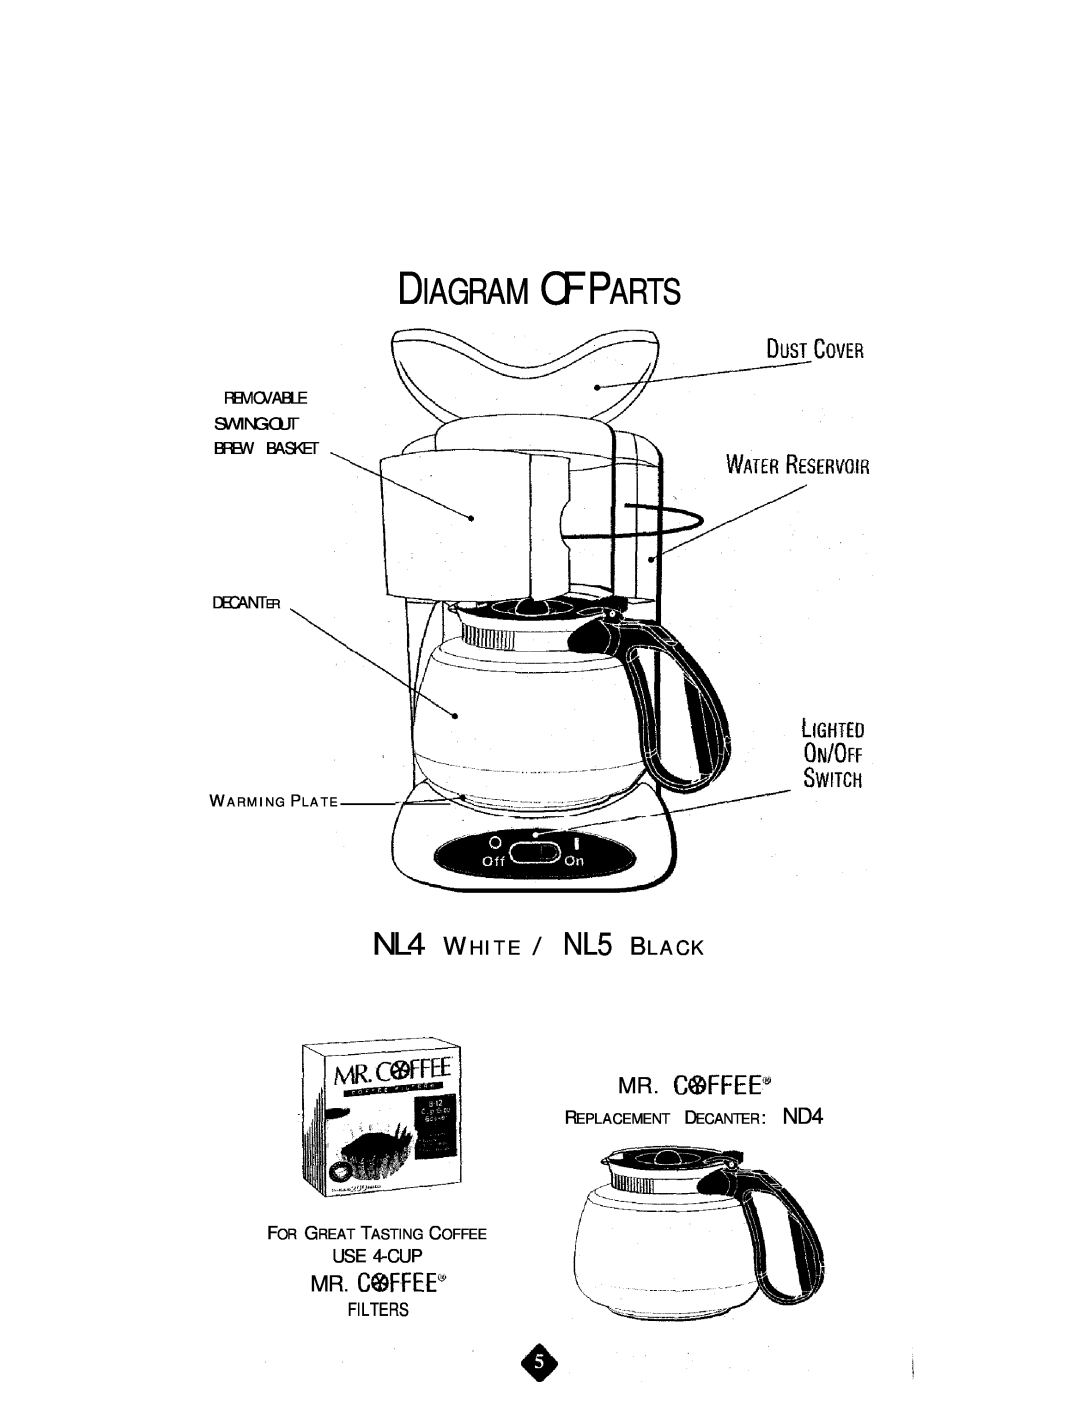 Mr. Coffee NL4 White, NL5 Black NL4 W H I T E / NL5 B L A C K, Mr. Cqffee”, Mr.Cbbffee”, Diagramofparts, USE4-CUP, Filters 